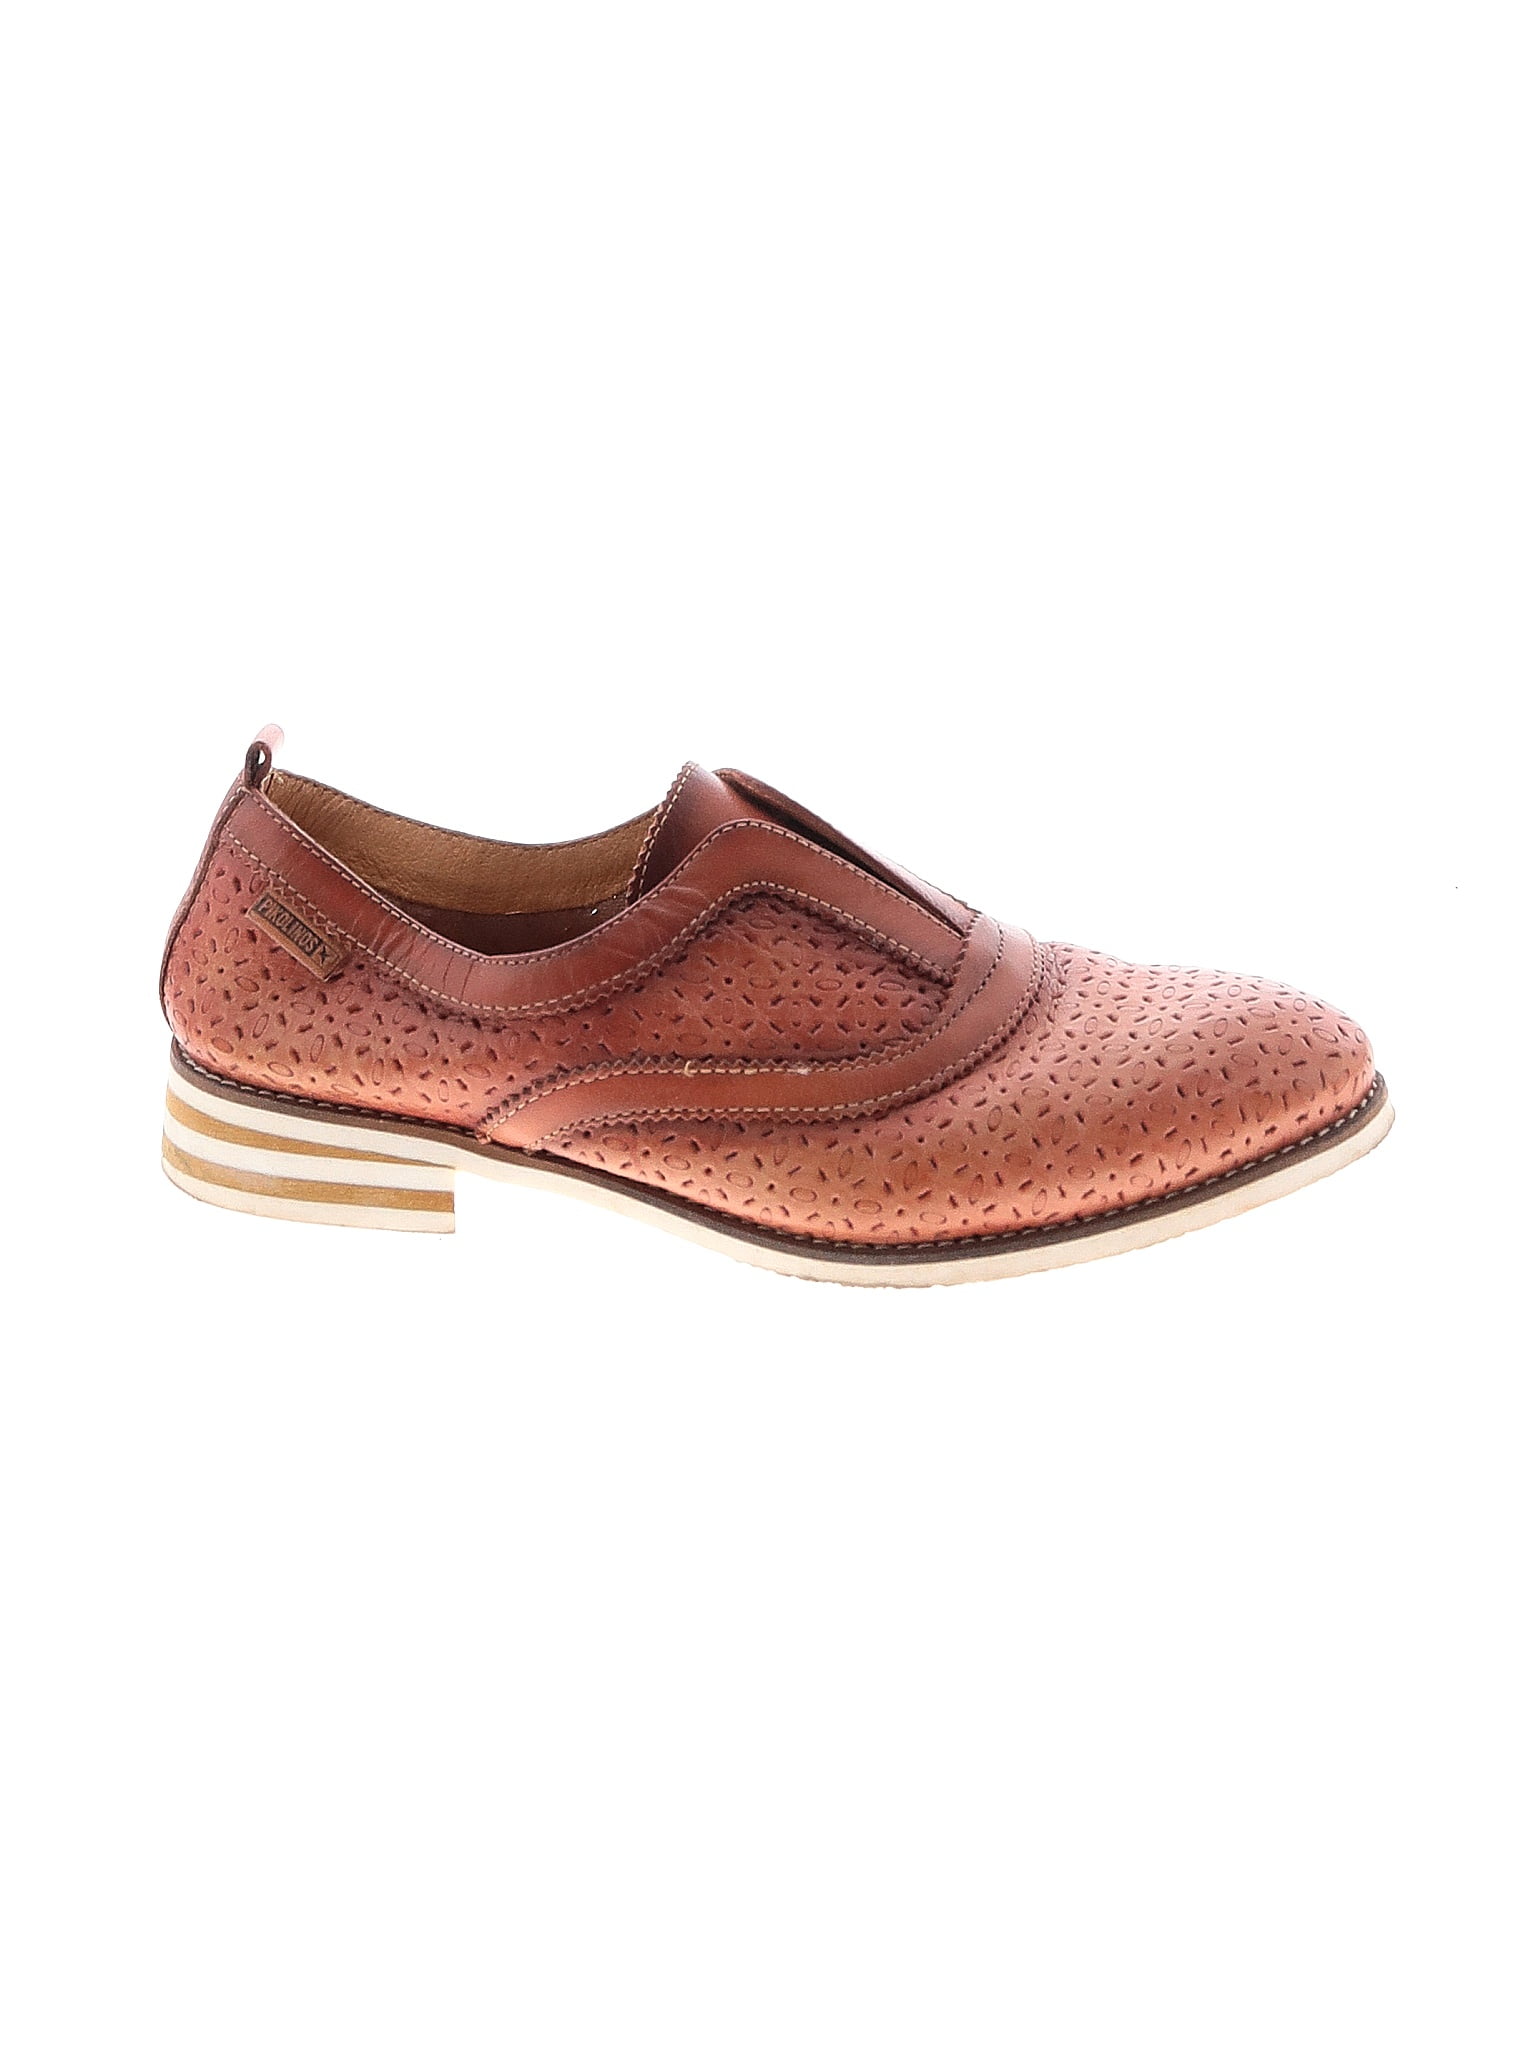 Pikolinos Solid Brown Flats Size 38 (EU) - 65% off | thredUP